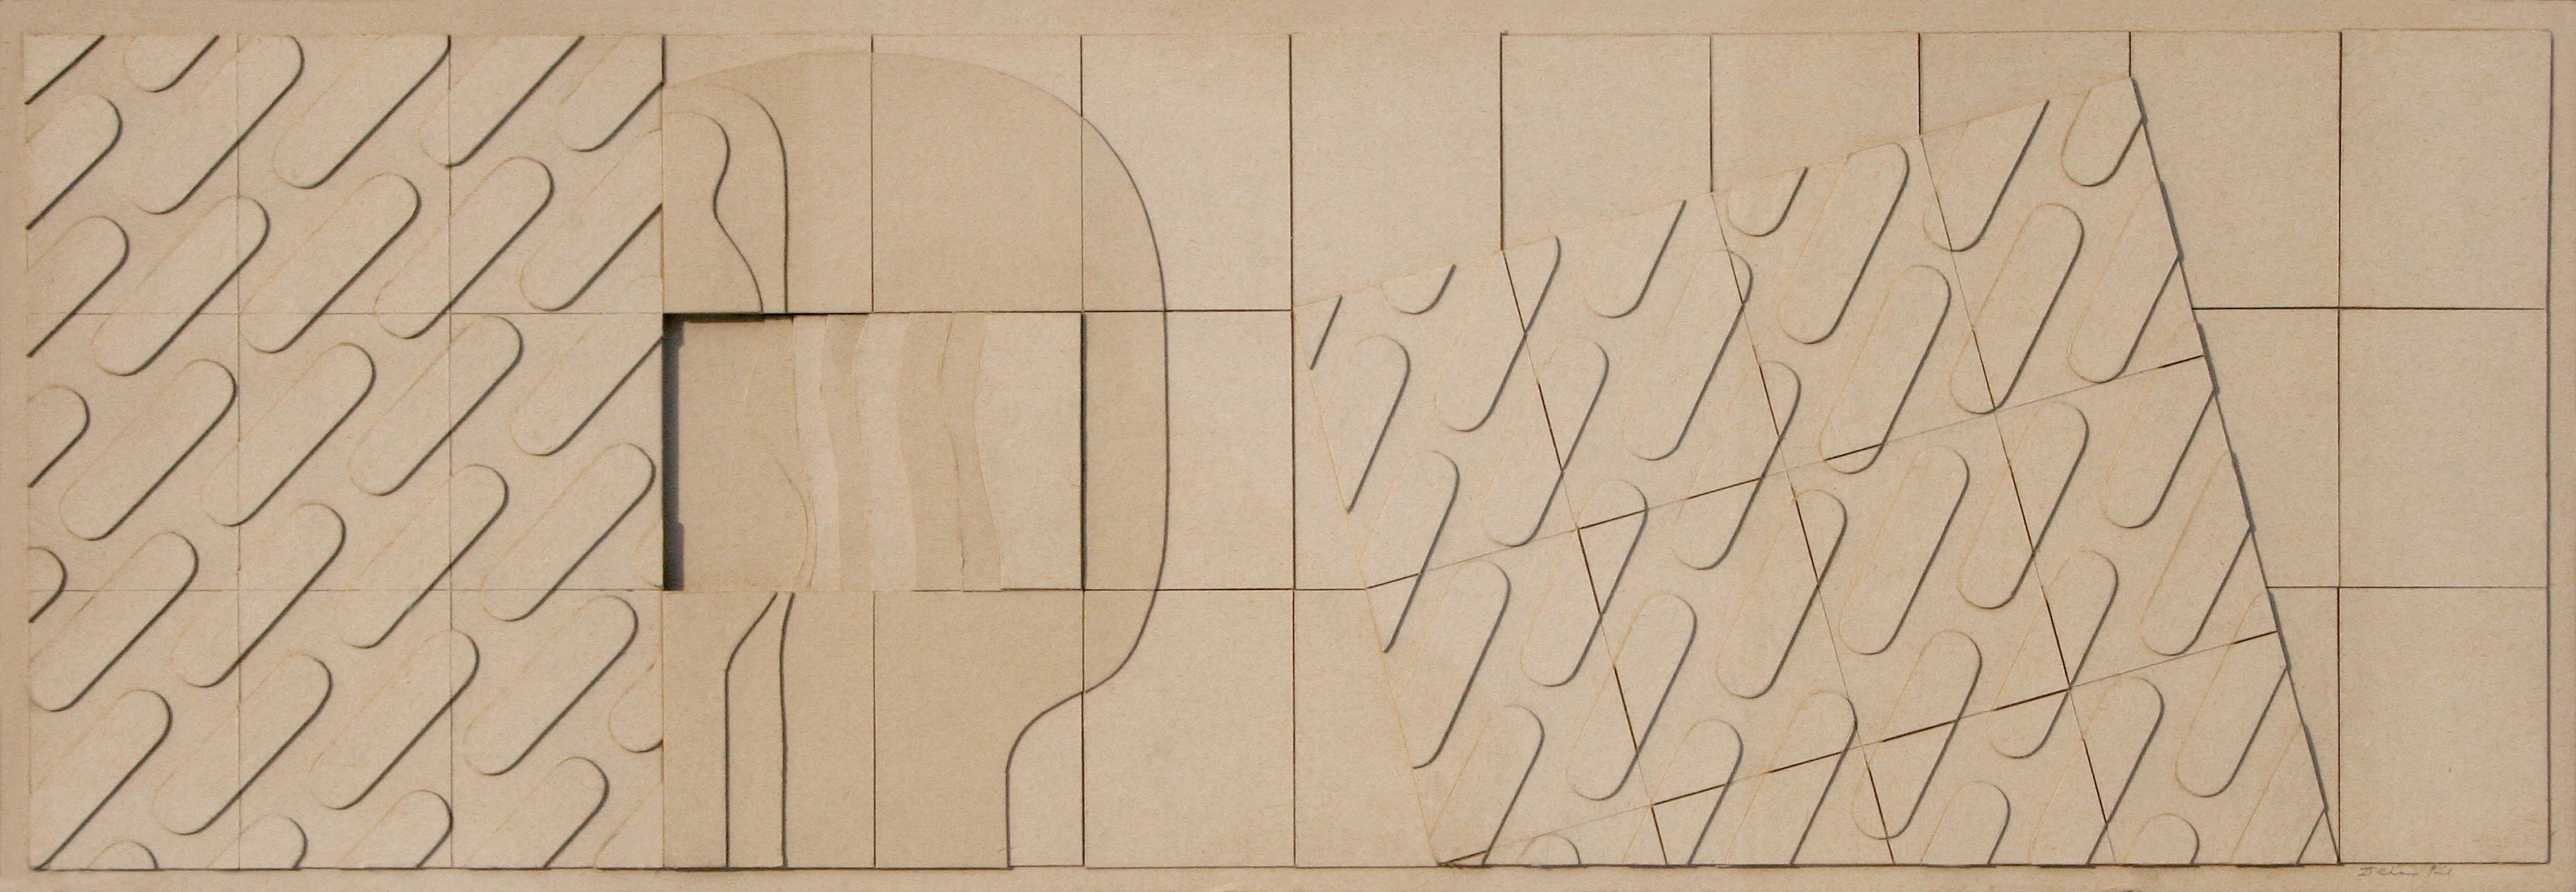 Deim, Pál: Cardboard relief, 1981, cardboard